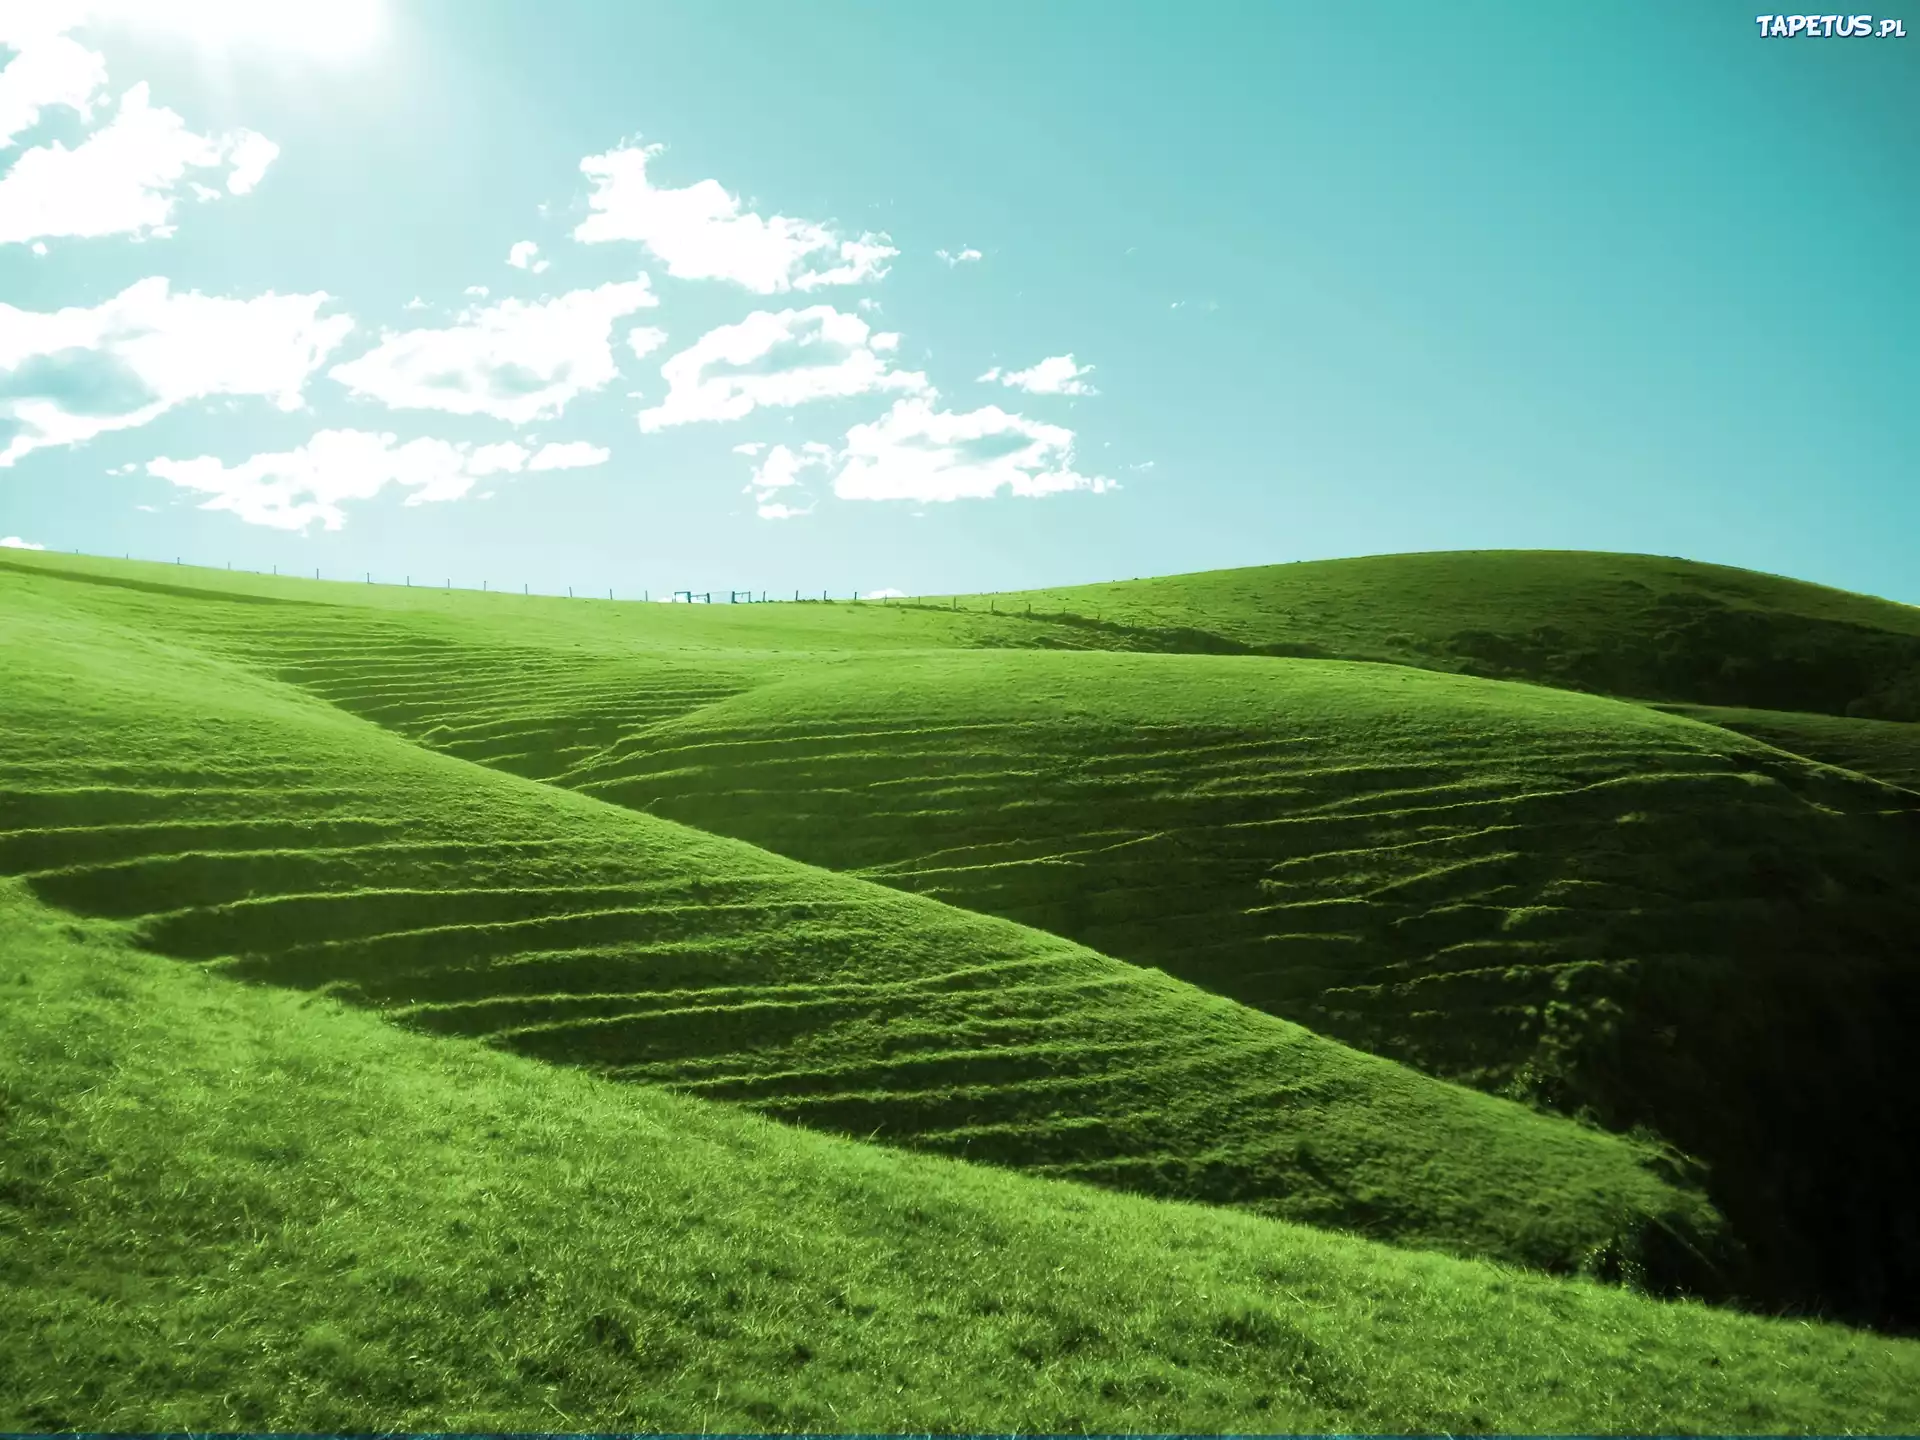 Под холмом. Green Hills зеленые холмы. Зеленые холмы 212525. Зеленый склон. Холм с травой.